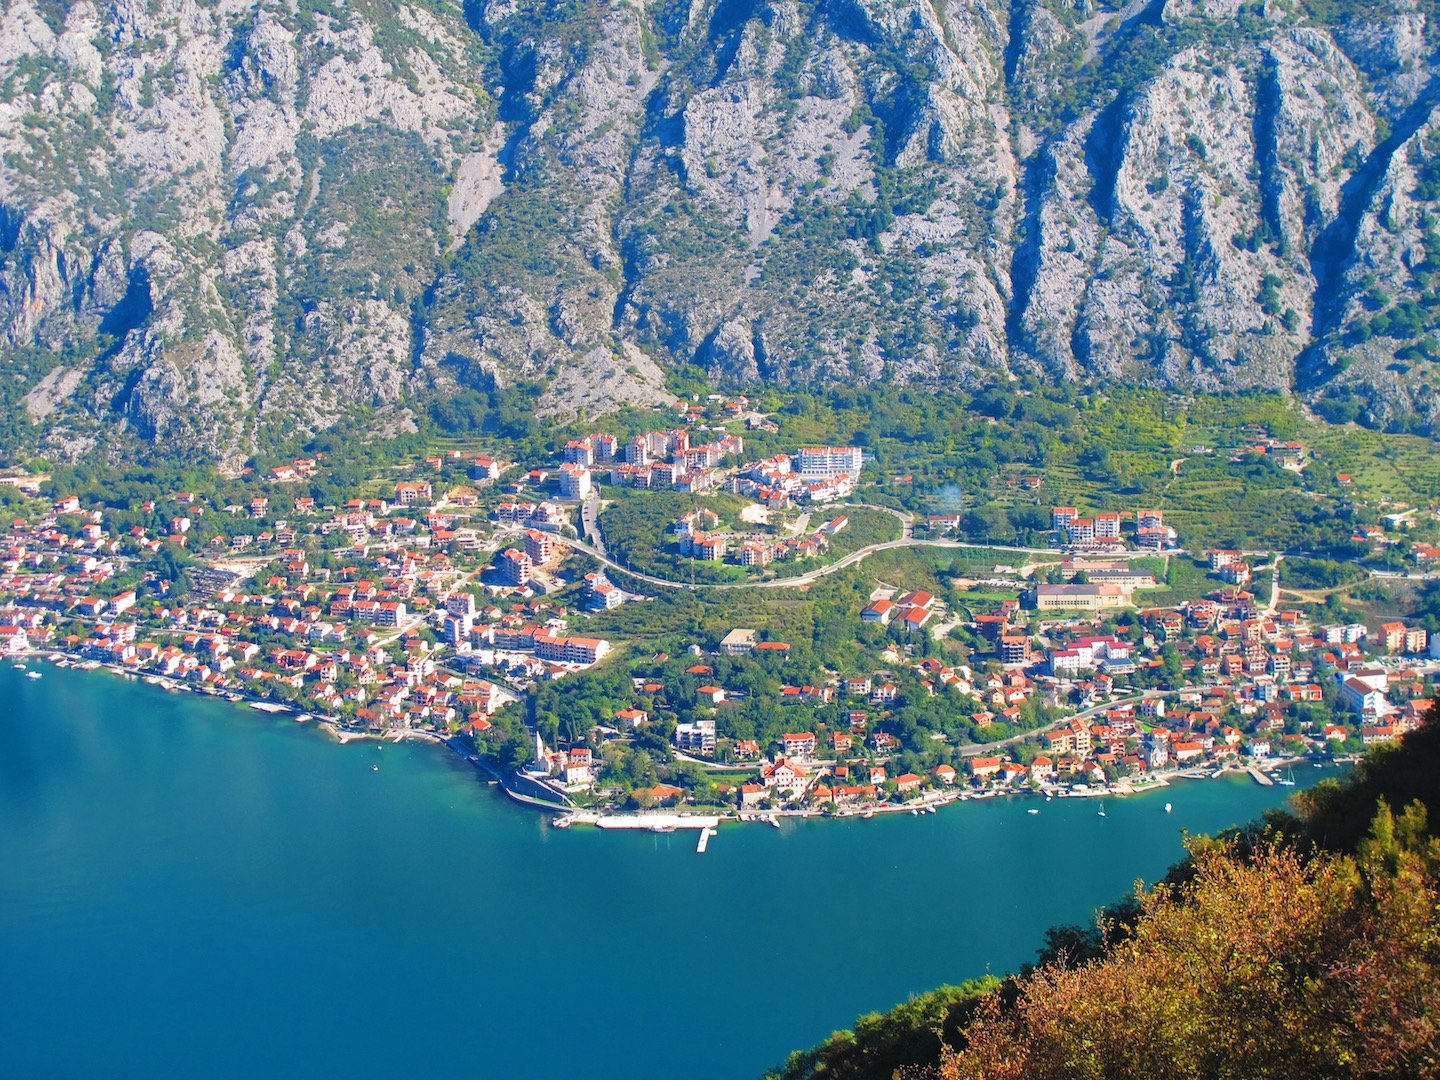 Towns, villages, and islets around Boka Kotorska